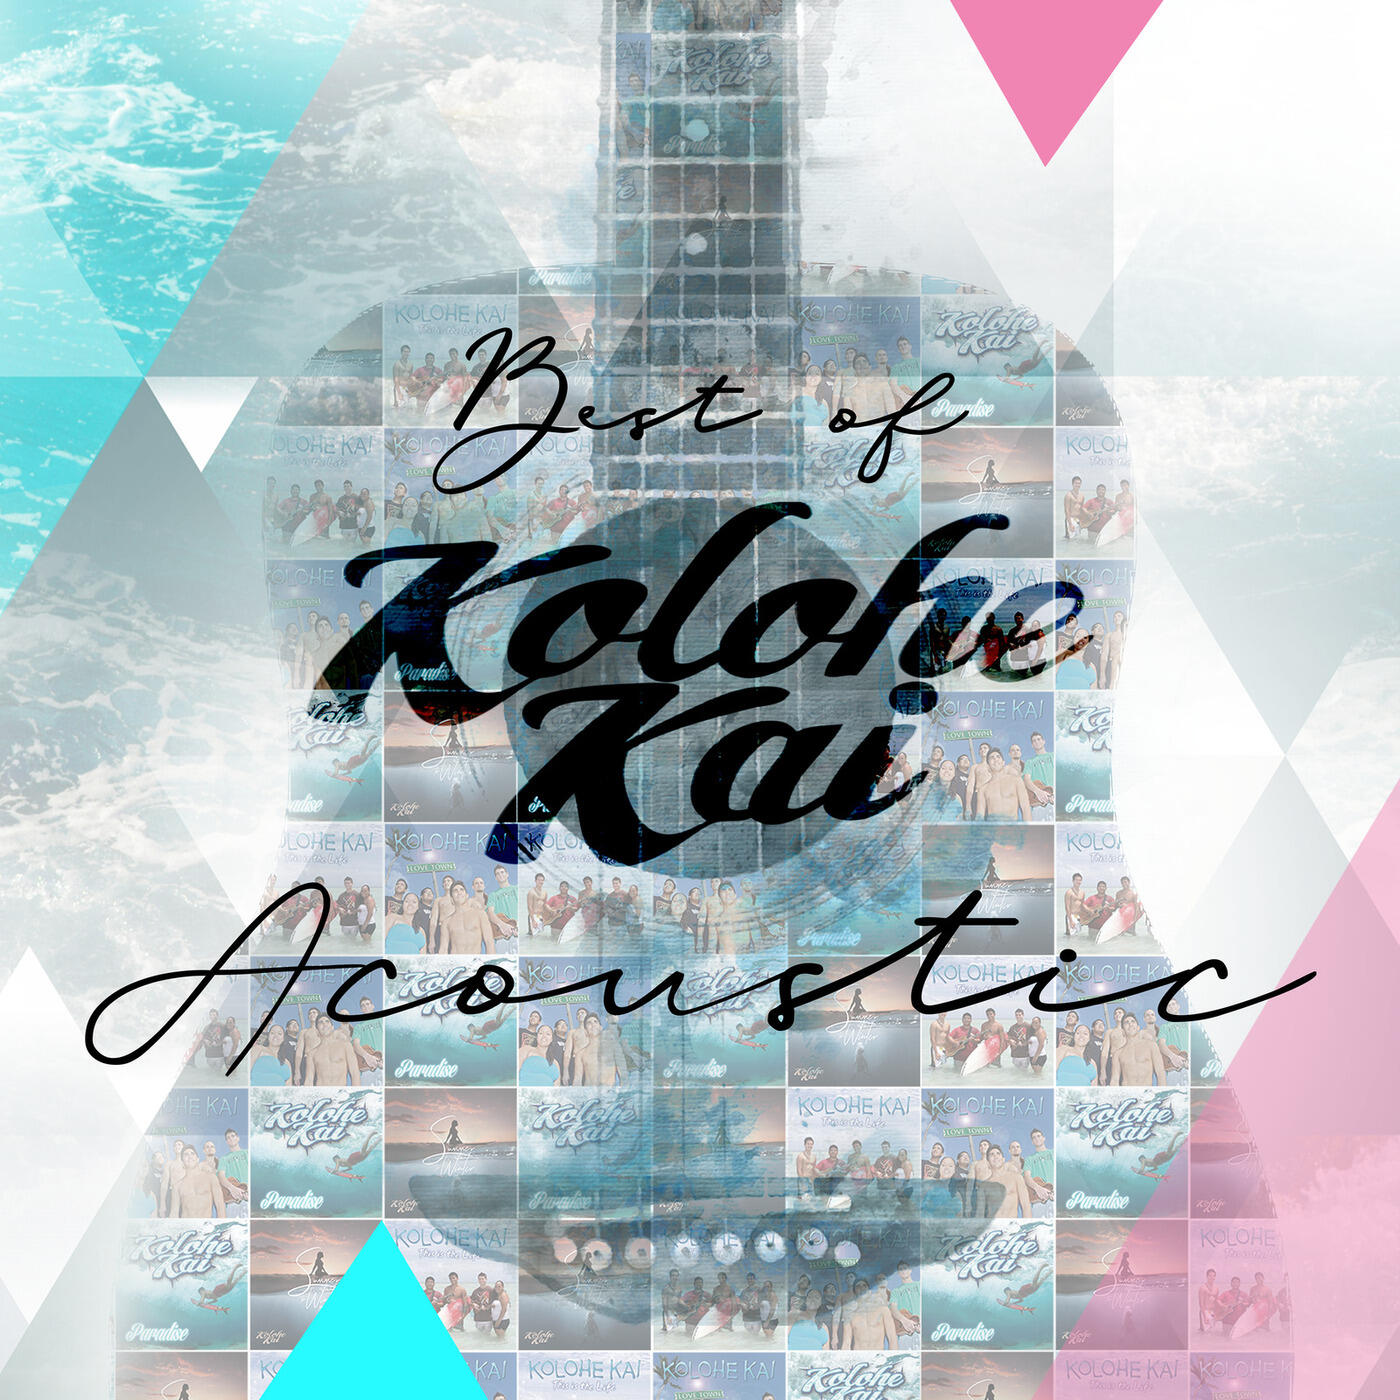 Kolohe Kai Best of Kolohe Kai (Acoustic) iHeart